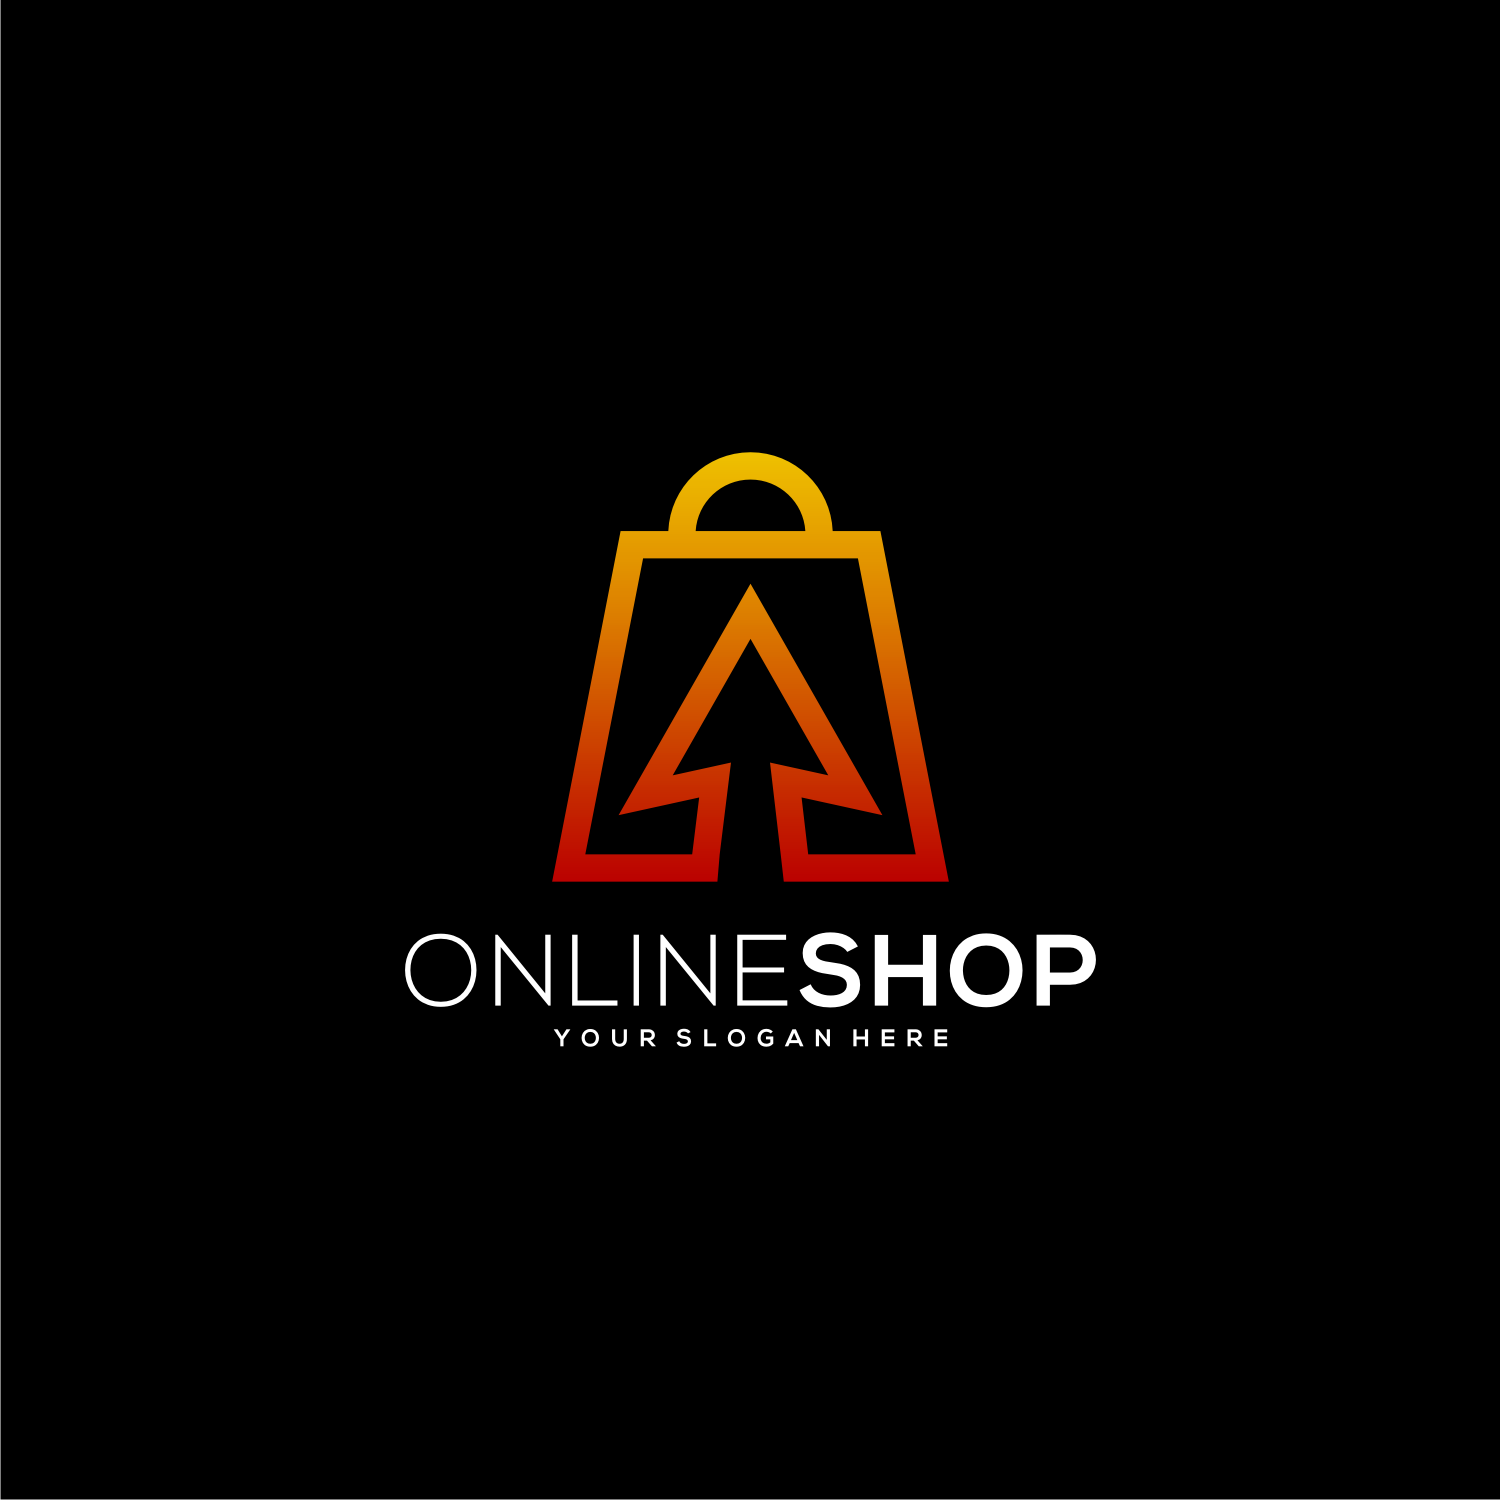 Online Shop Logo Design Vector with Arrow cover image.